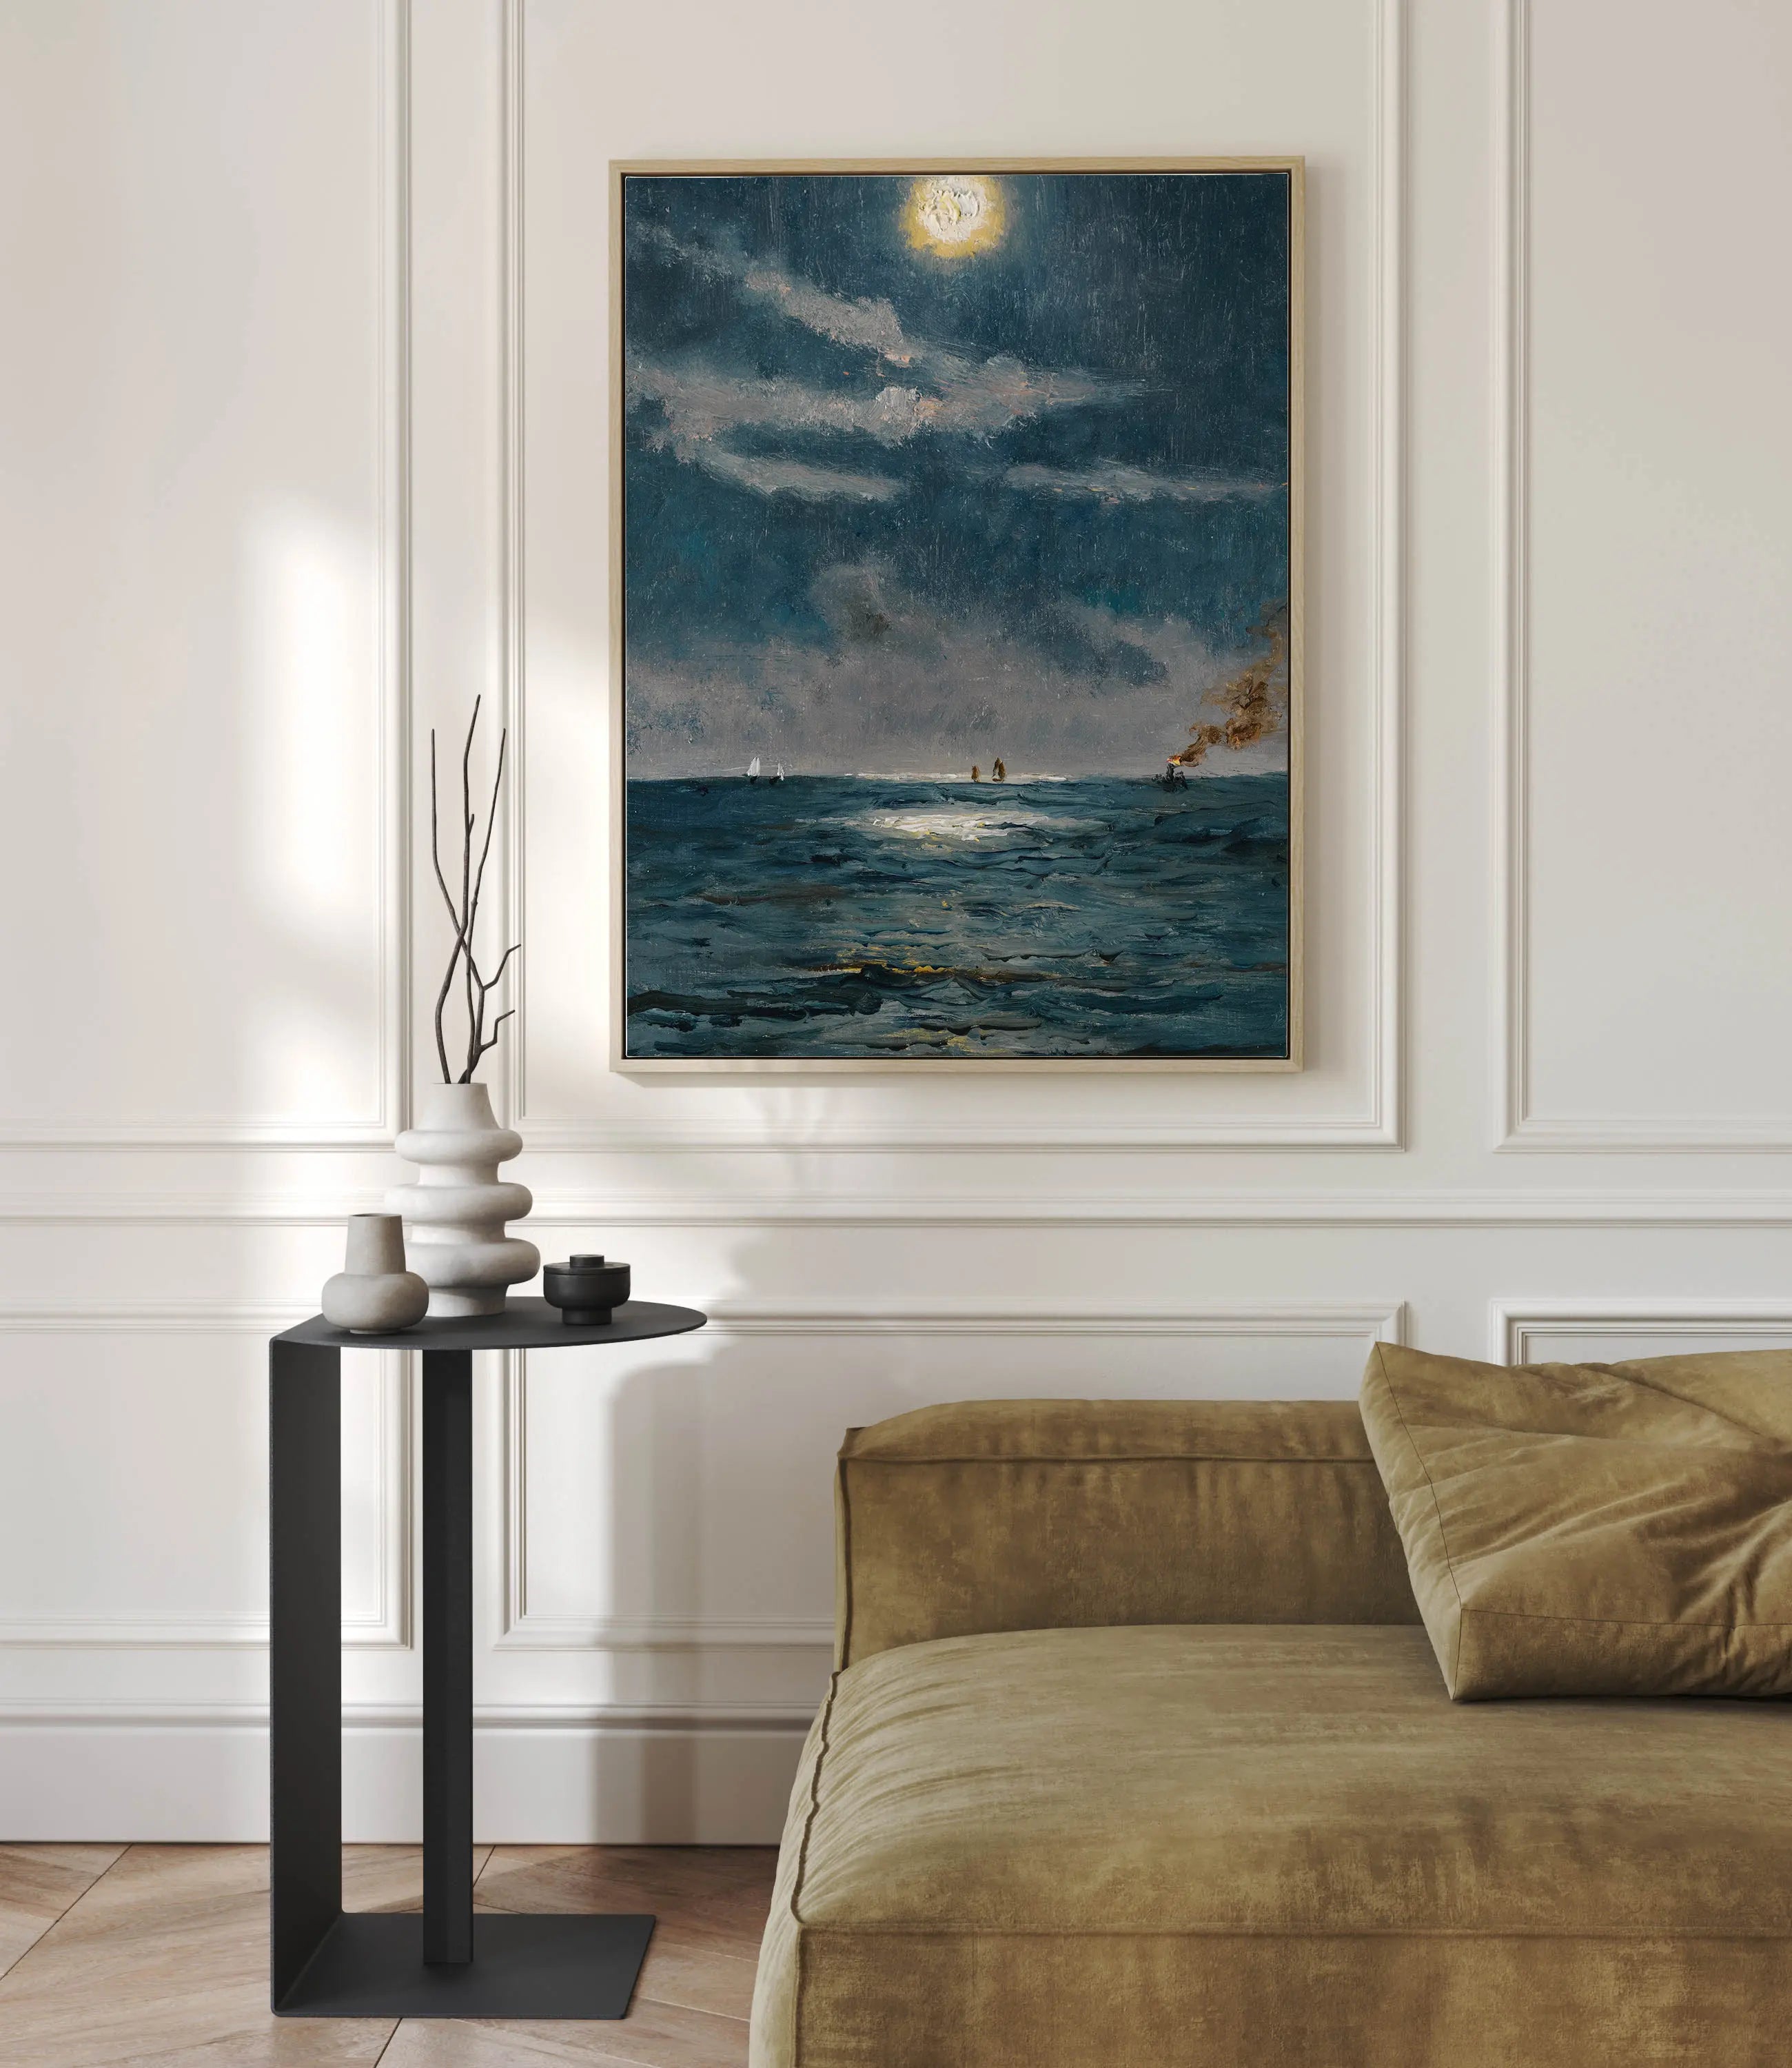 A Calm Moonlit Marine Scene by Alfred Stevens